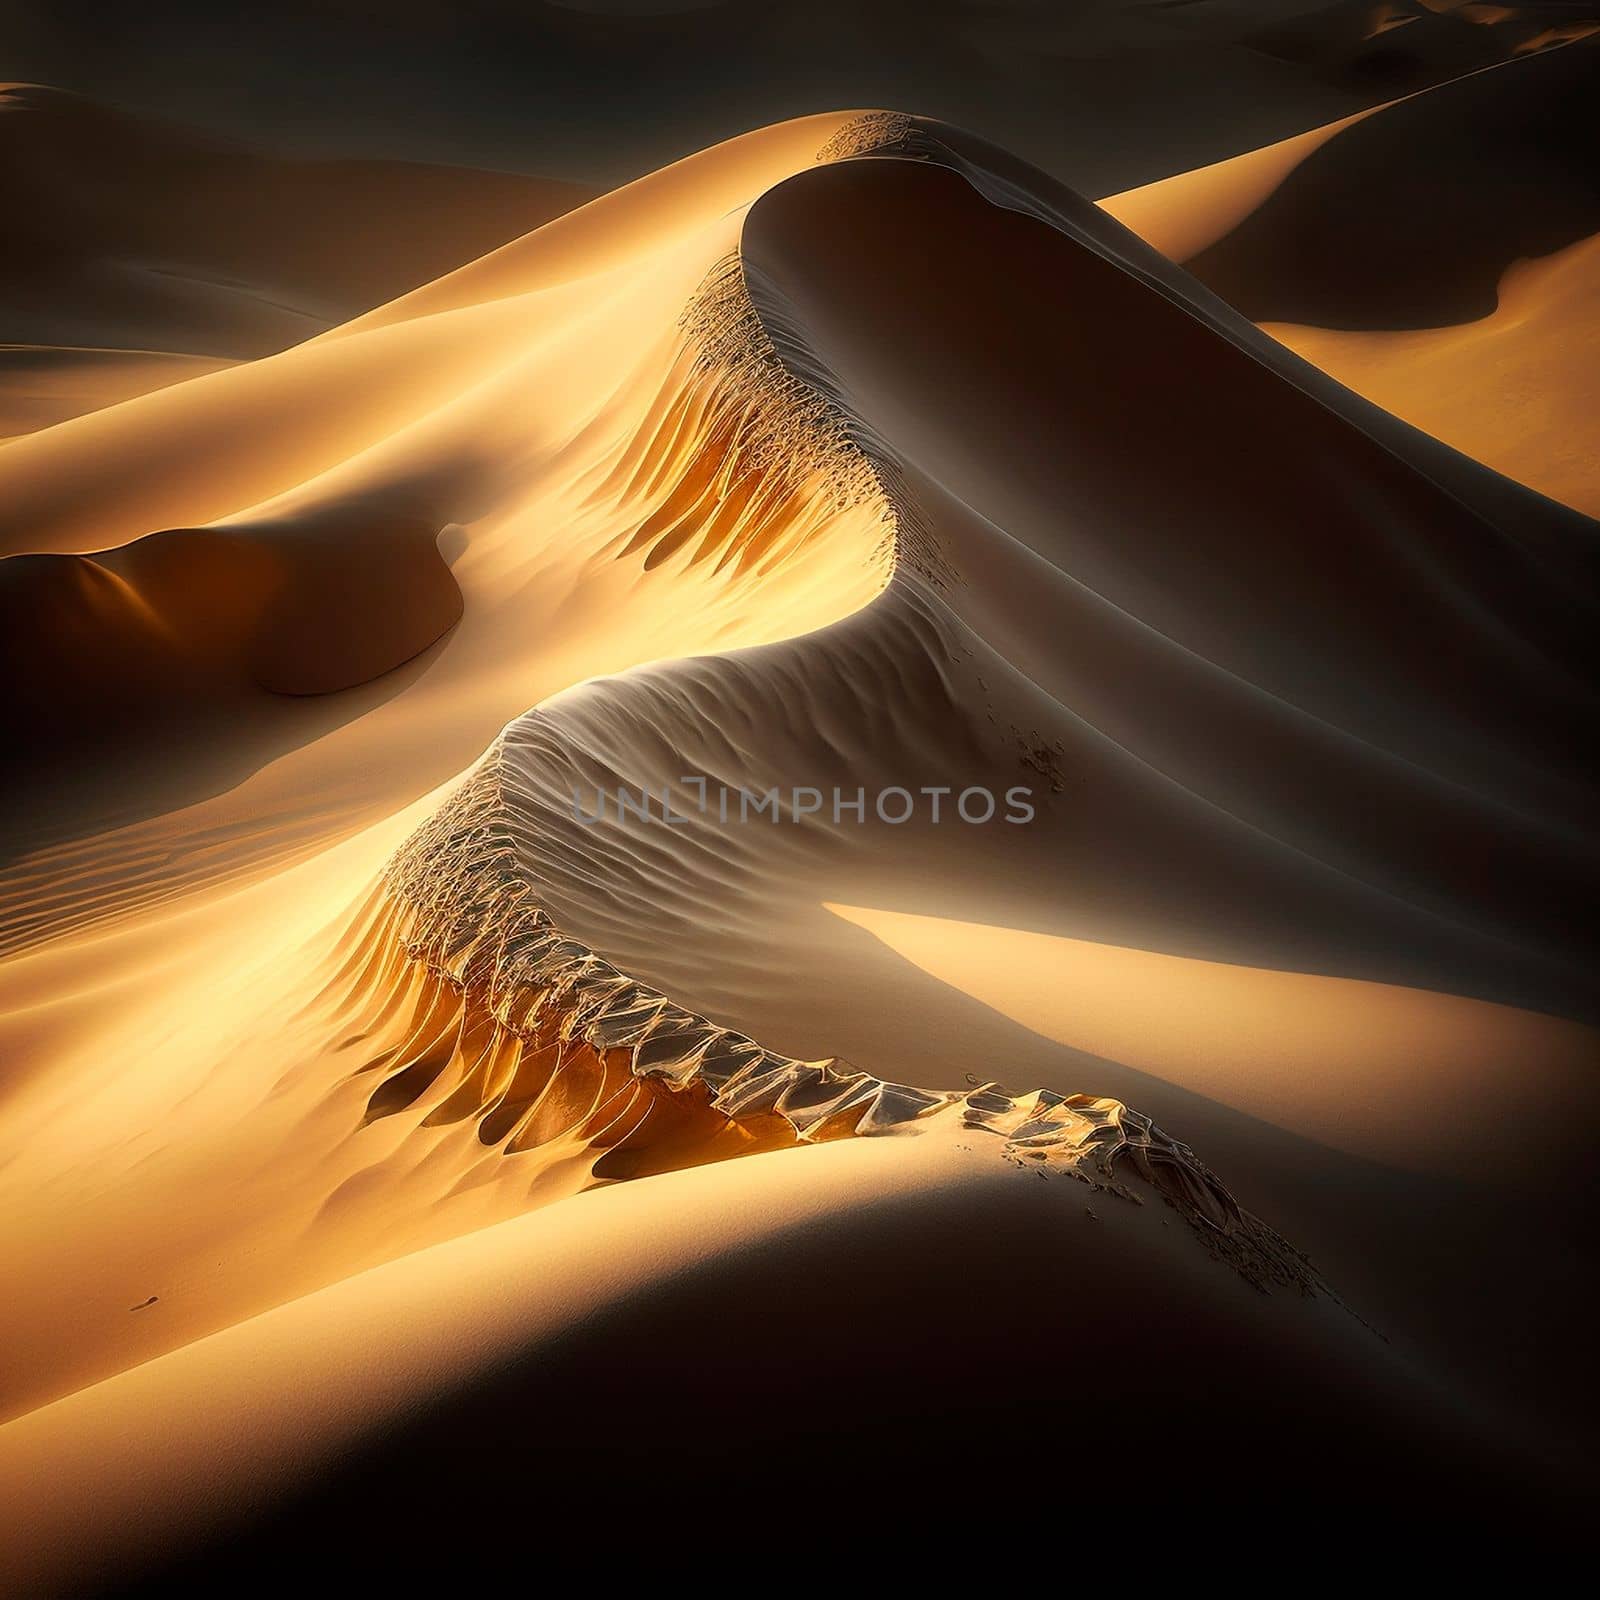 Cinematic depiction of the desert and desert dunes by NeuroSky